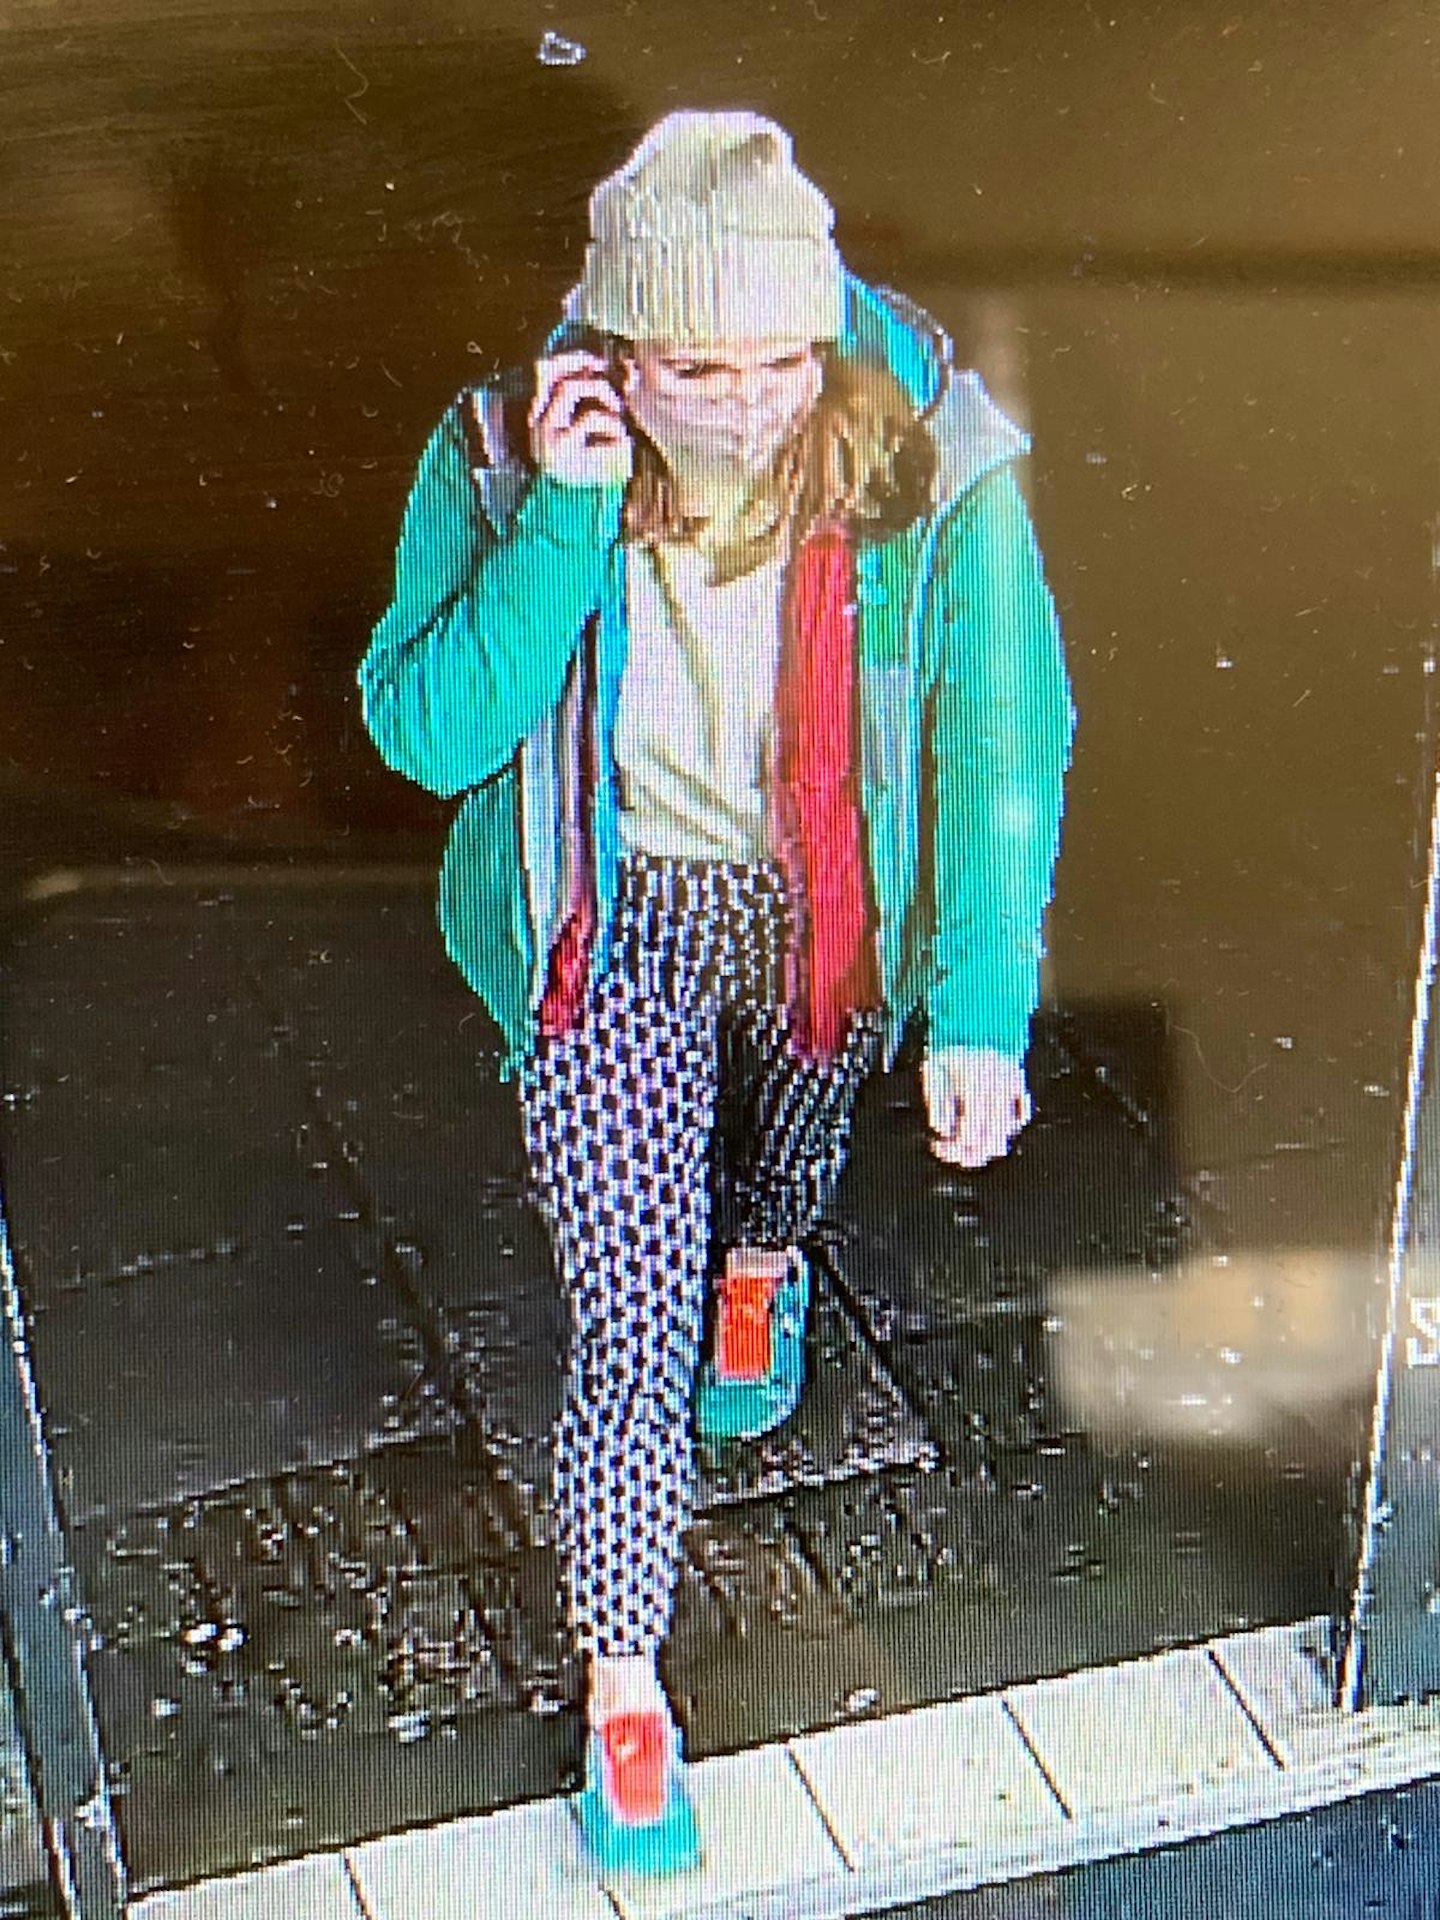 CCTV of Sarah Everard walking home